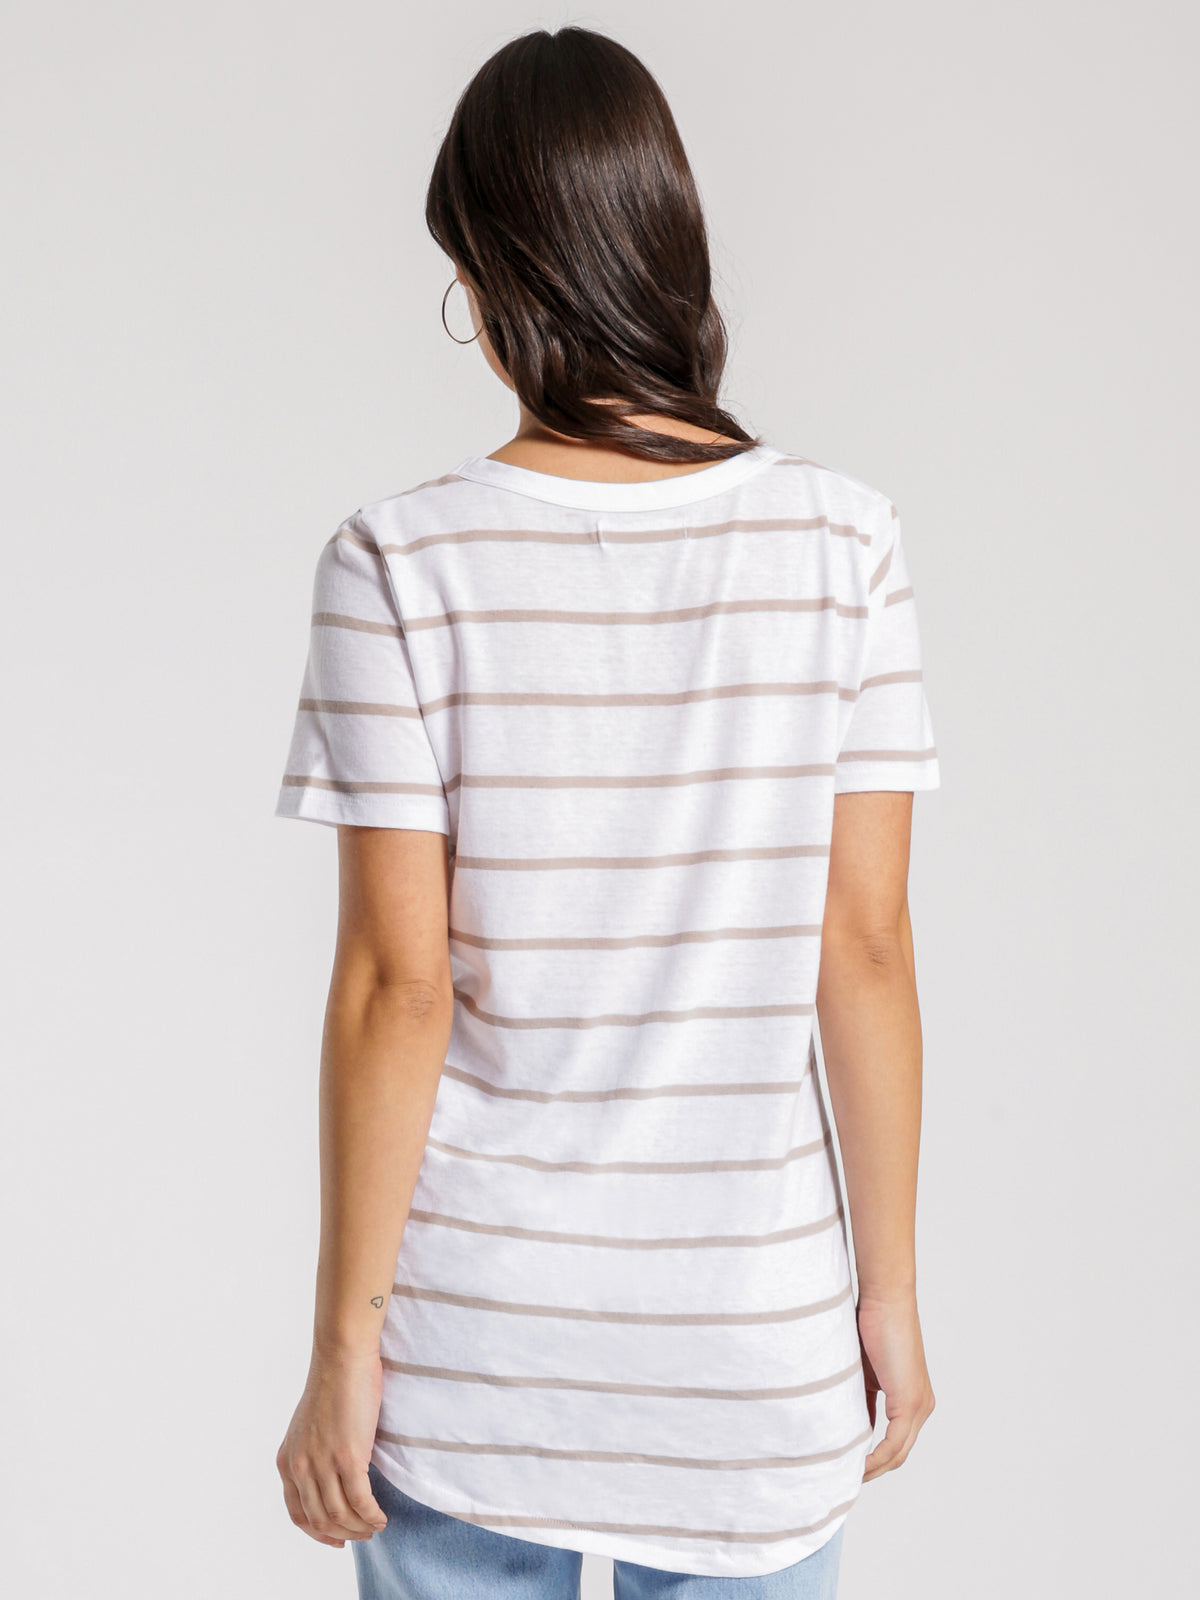 Soft V-Neck T-Shirt in Taupe Stripe